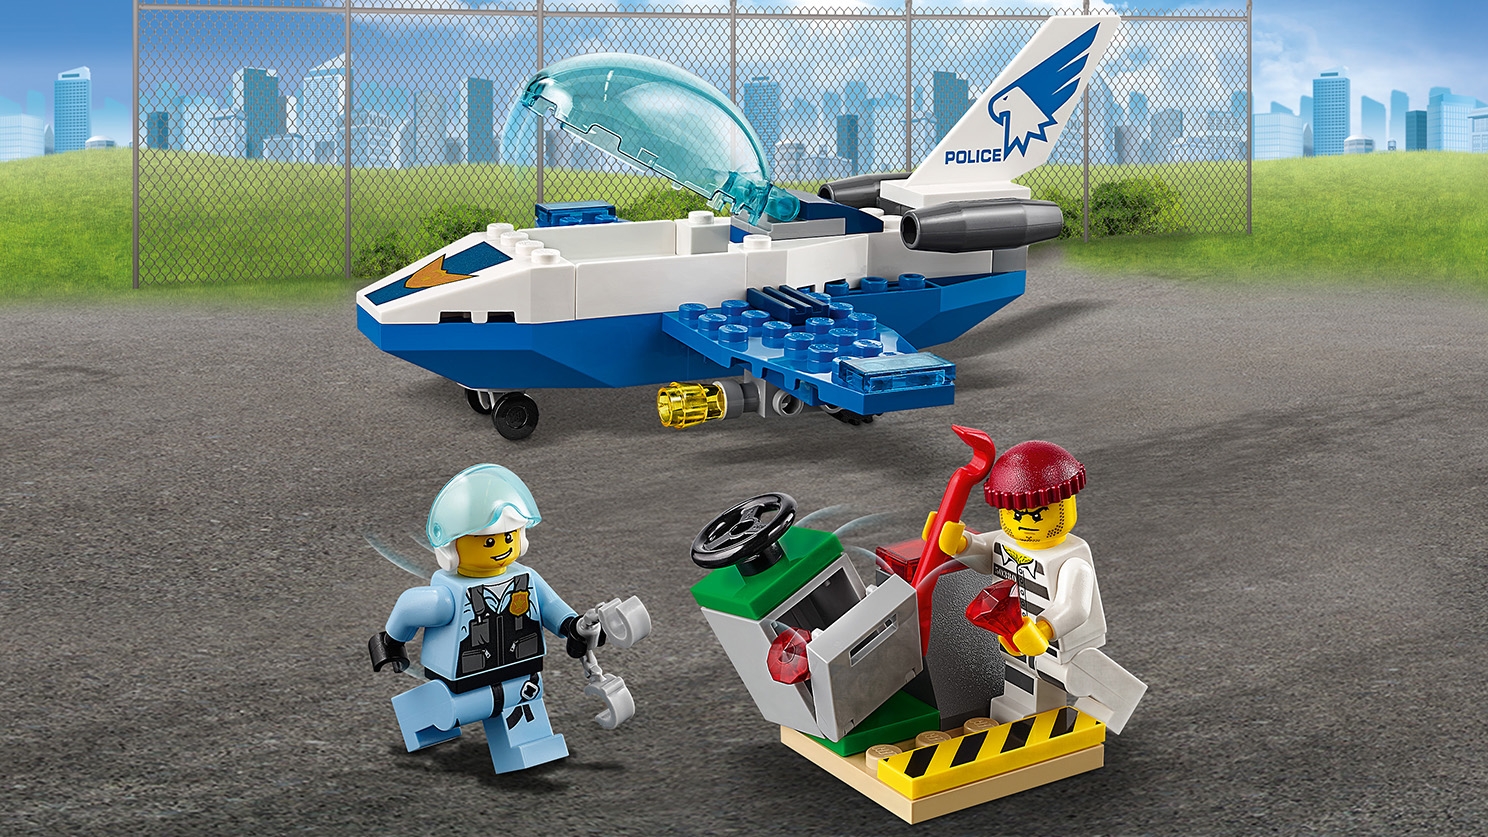 Lego City Patrulla De Policía cielo Jet 60206 